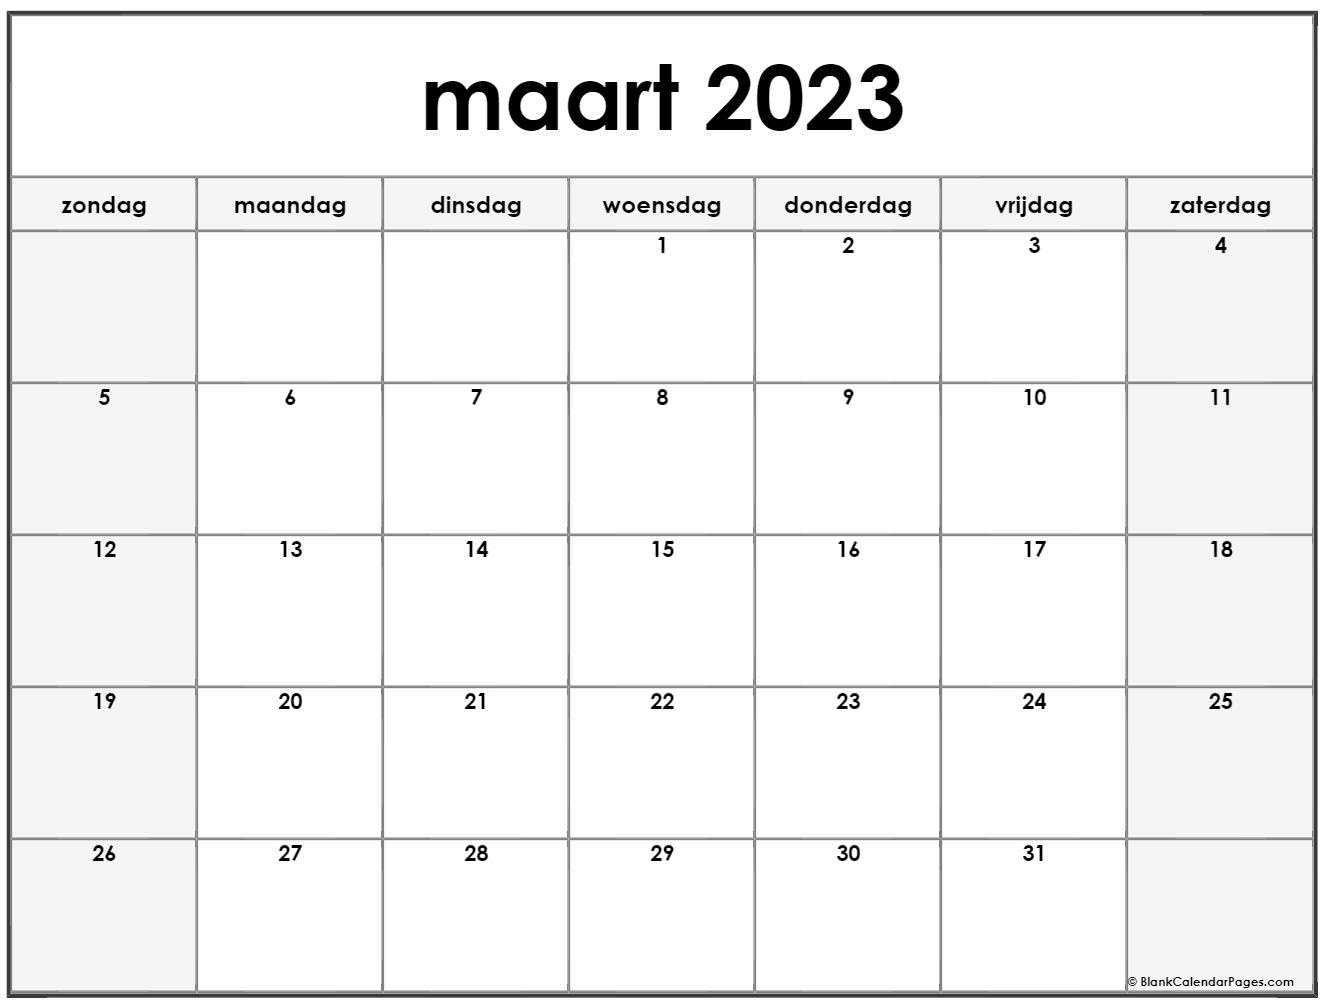 Vuilnisbak afgunst Zes maart 2023 kalender Nederlandse | Kalender maart